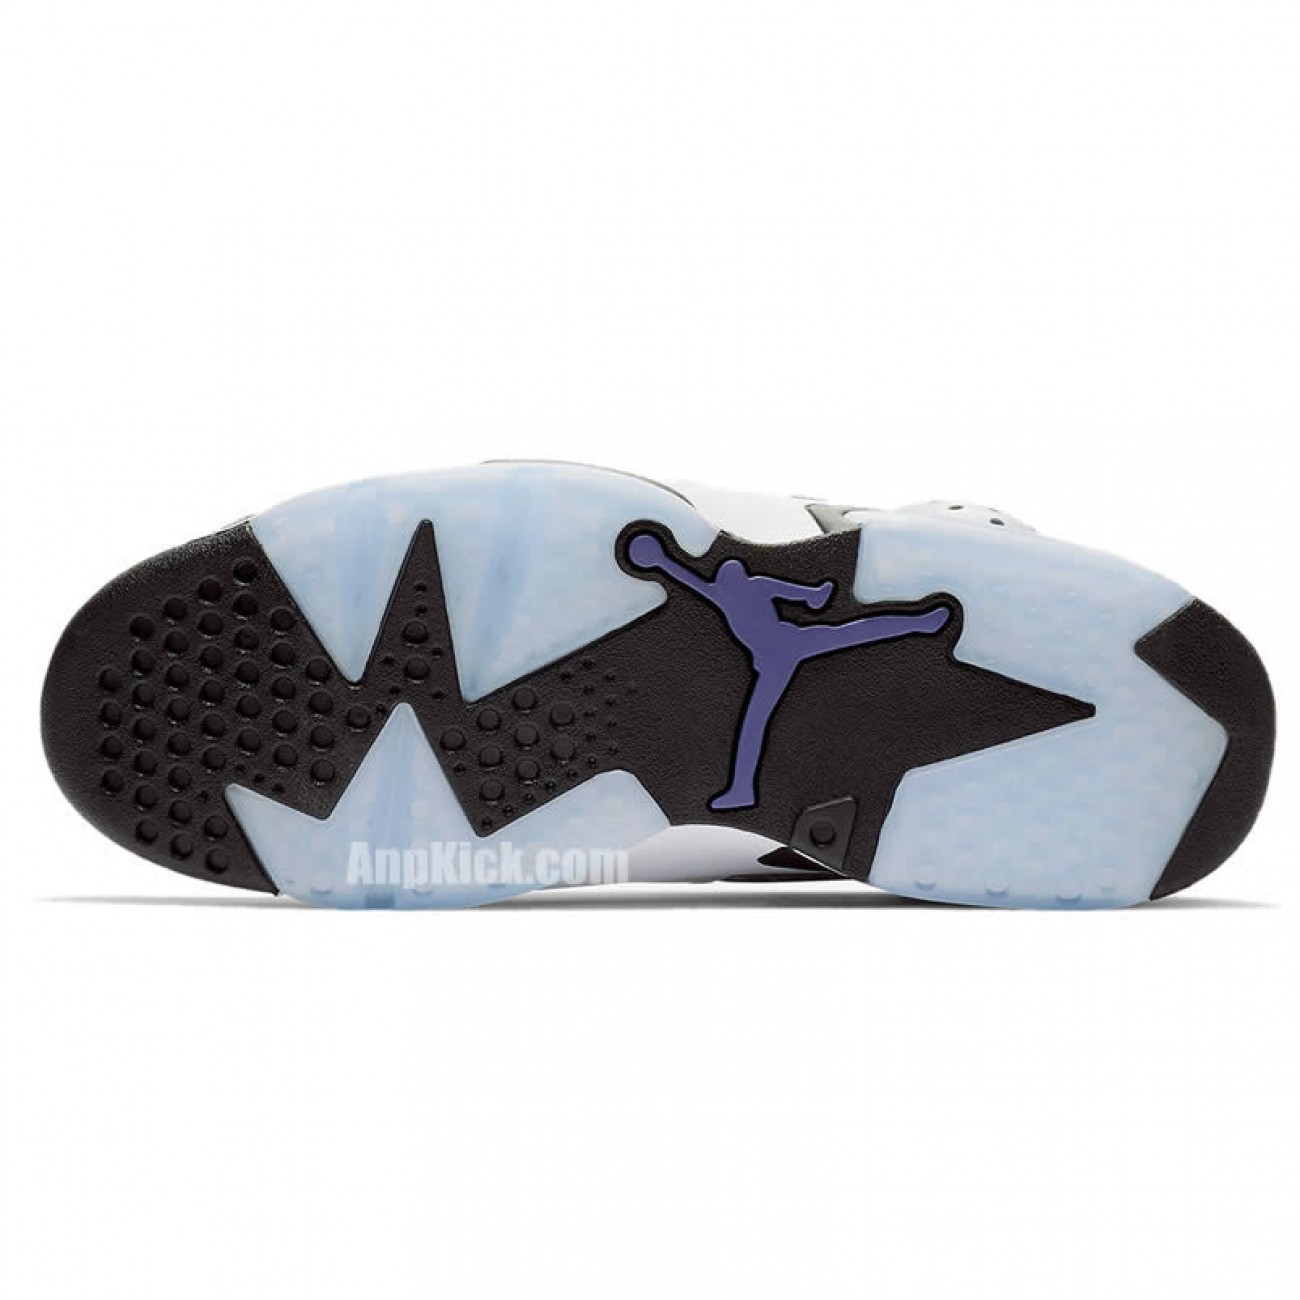 Air Jordan 6 "Flint" Grey 2019 On Feet Review Outfits CI3125-100